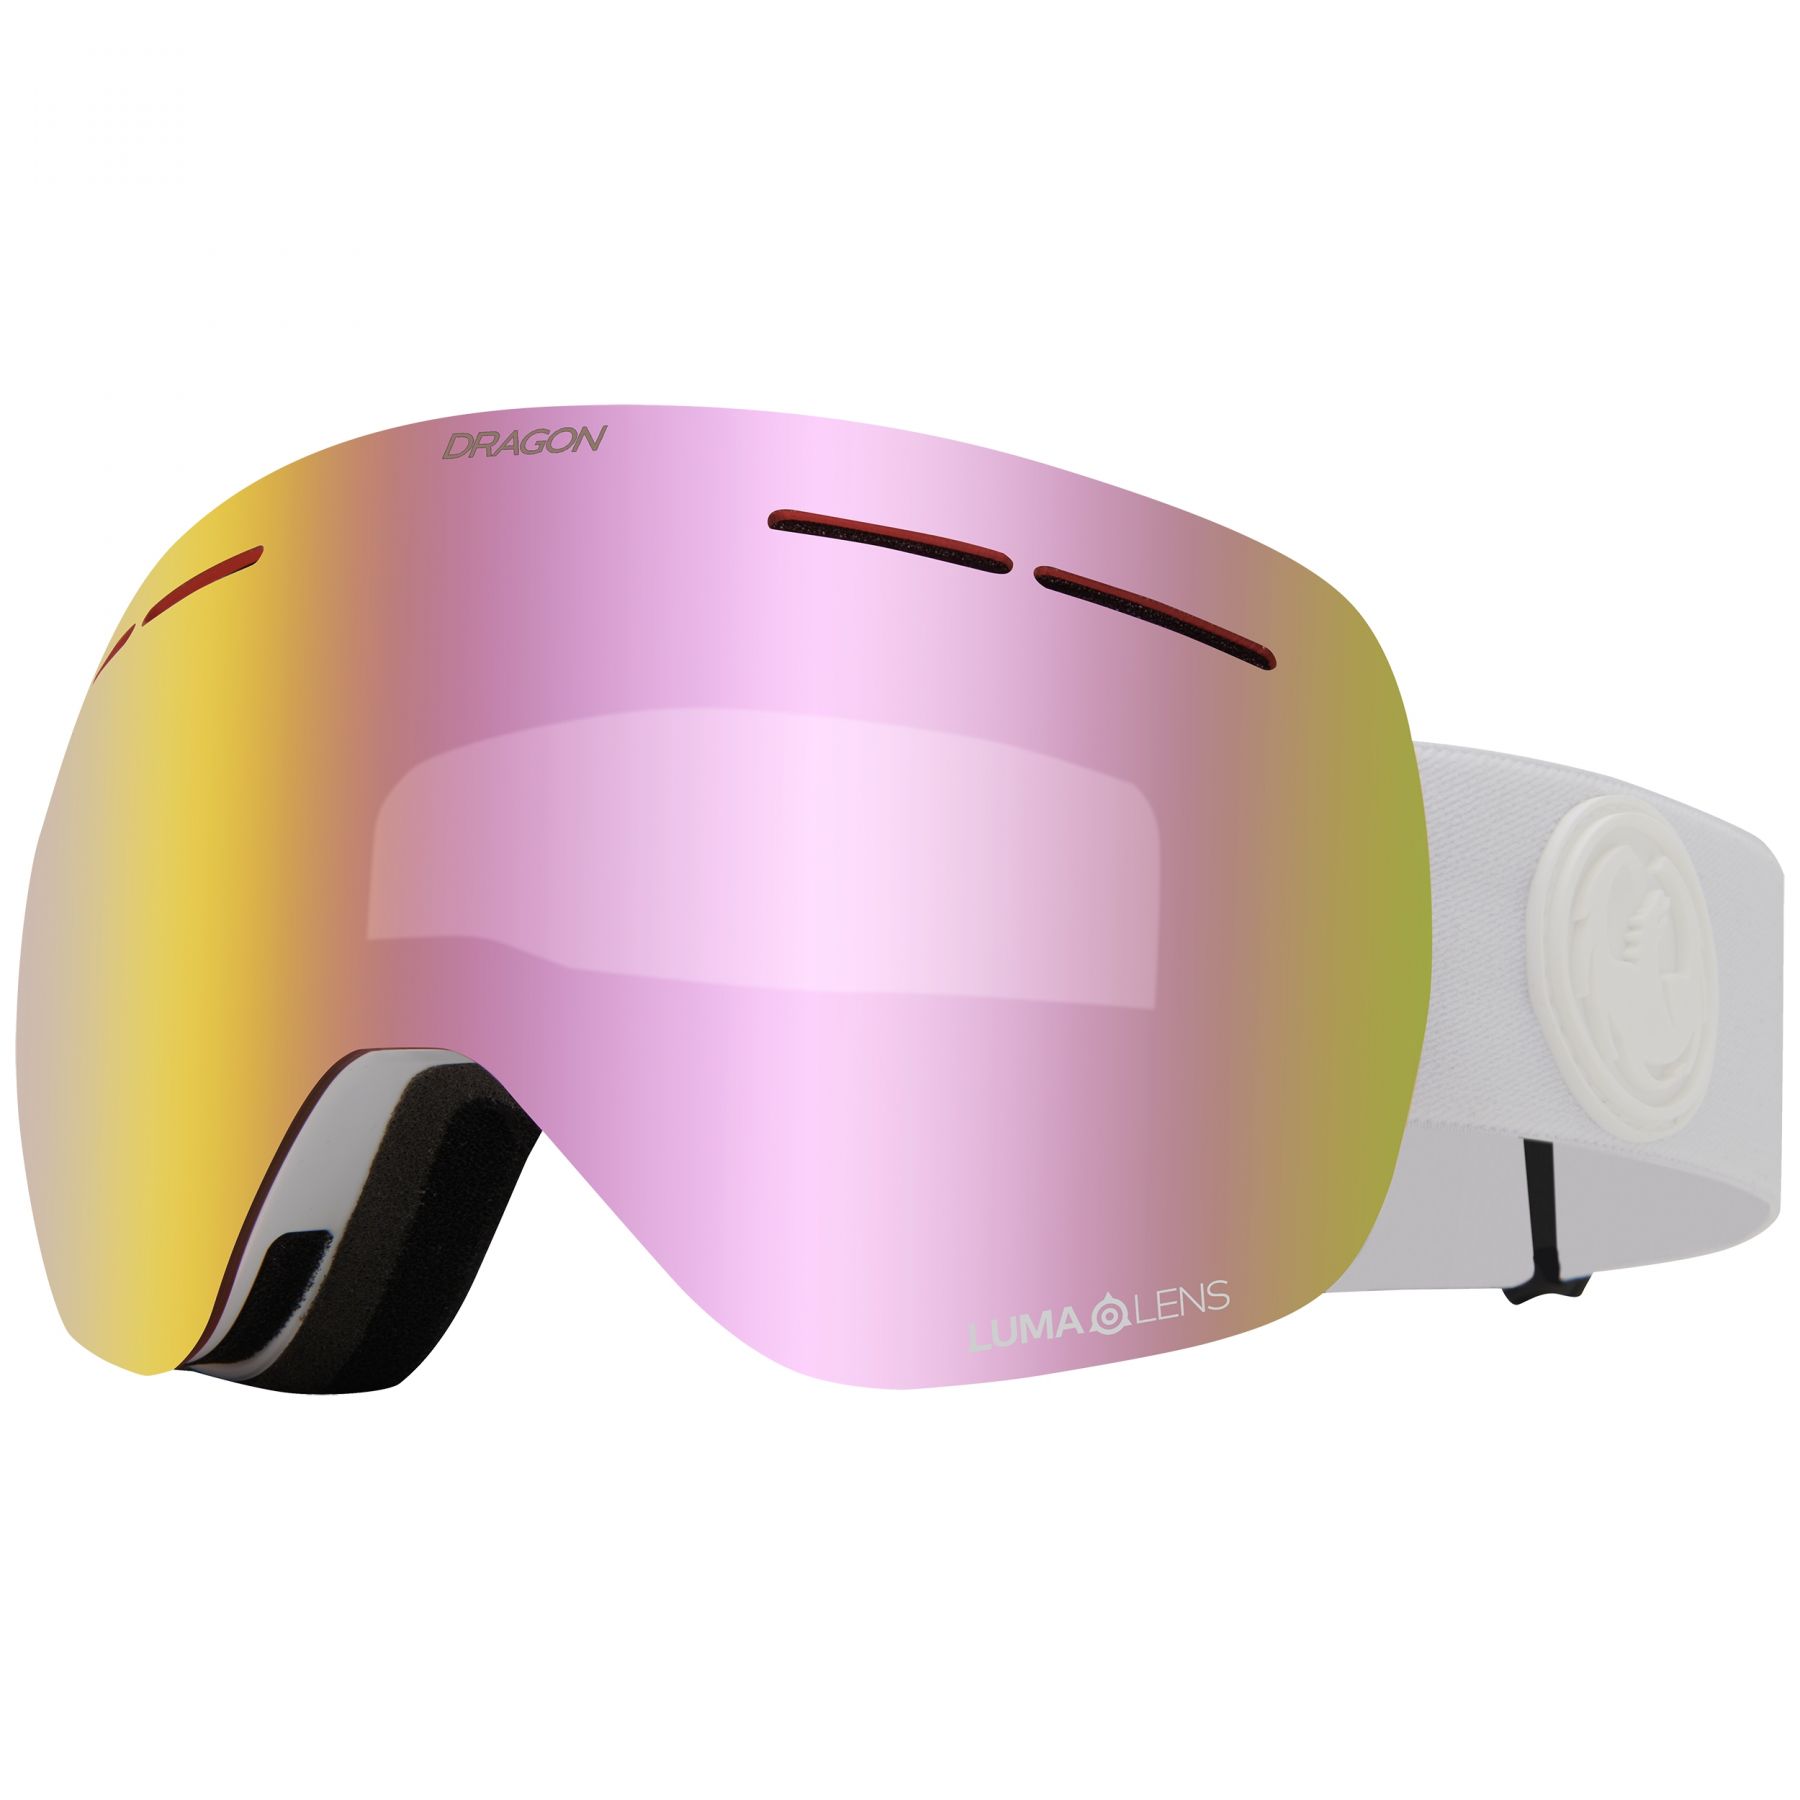 Se Dragon X1s, skibriller, whiteout hos Skisport.dk